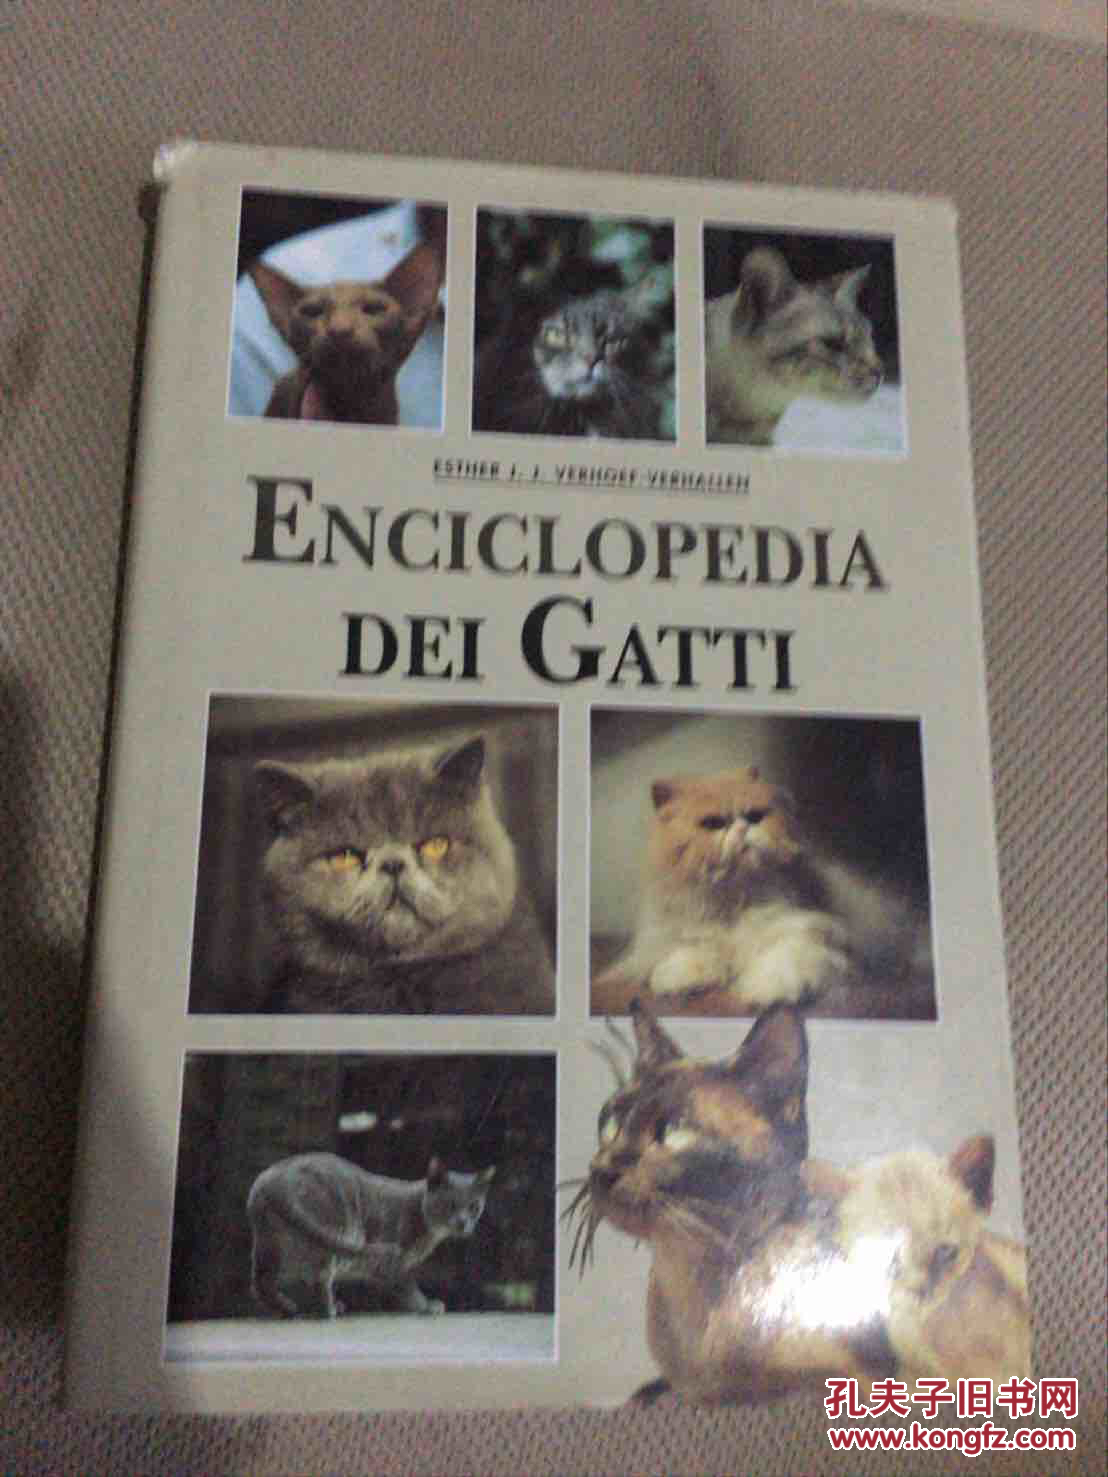 Encyclopedia dei gatti